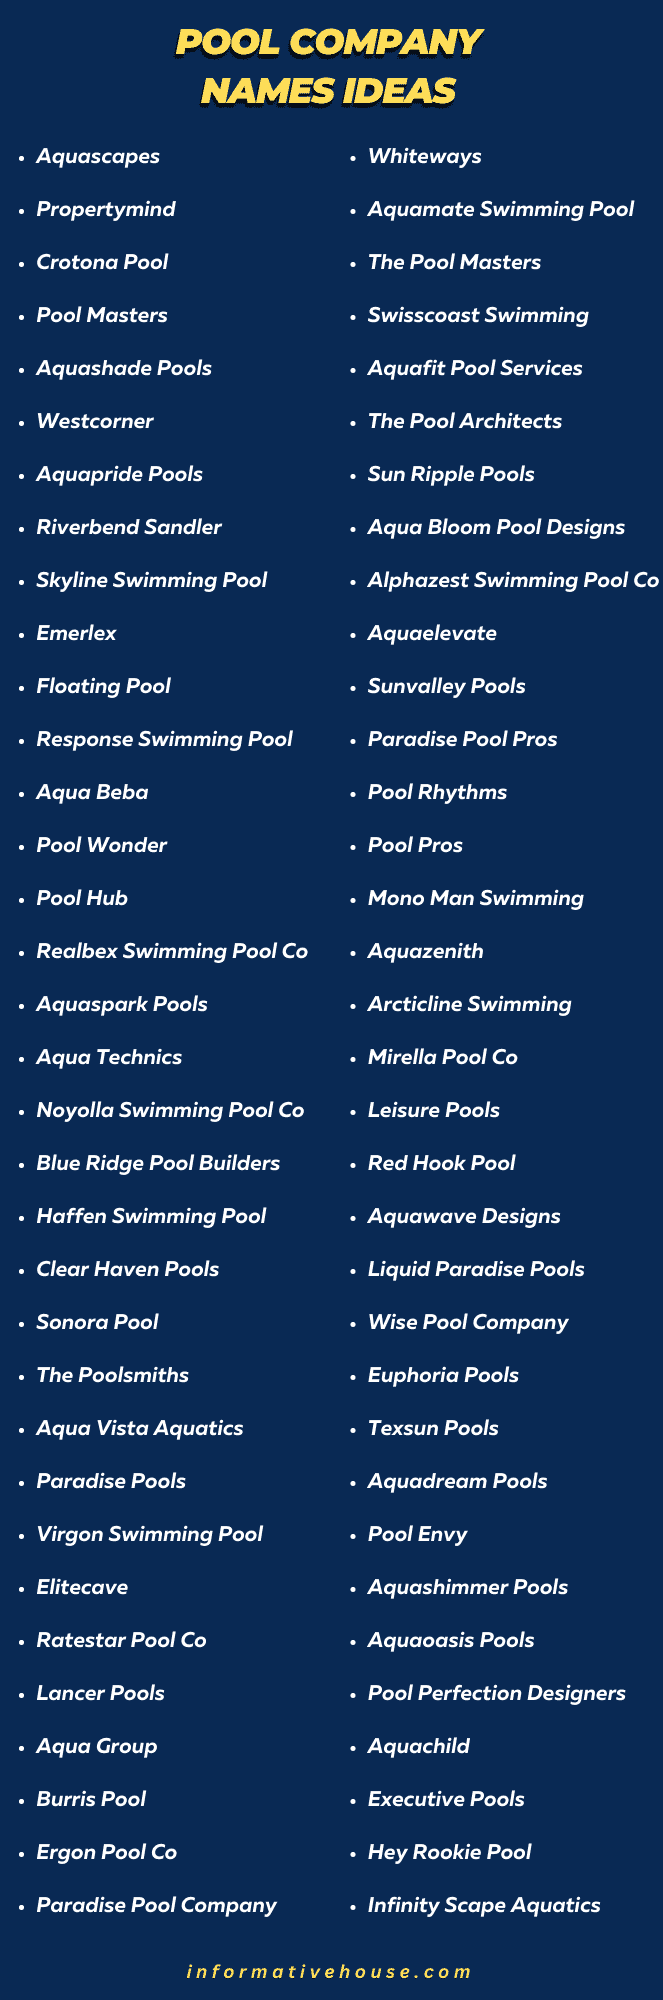 Pool Company Names